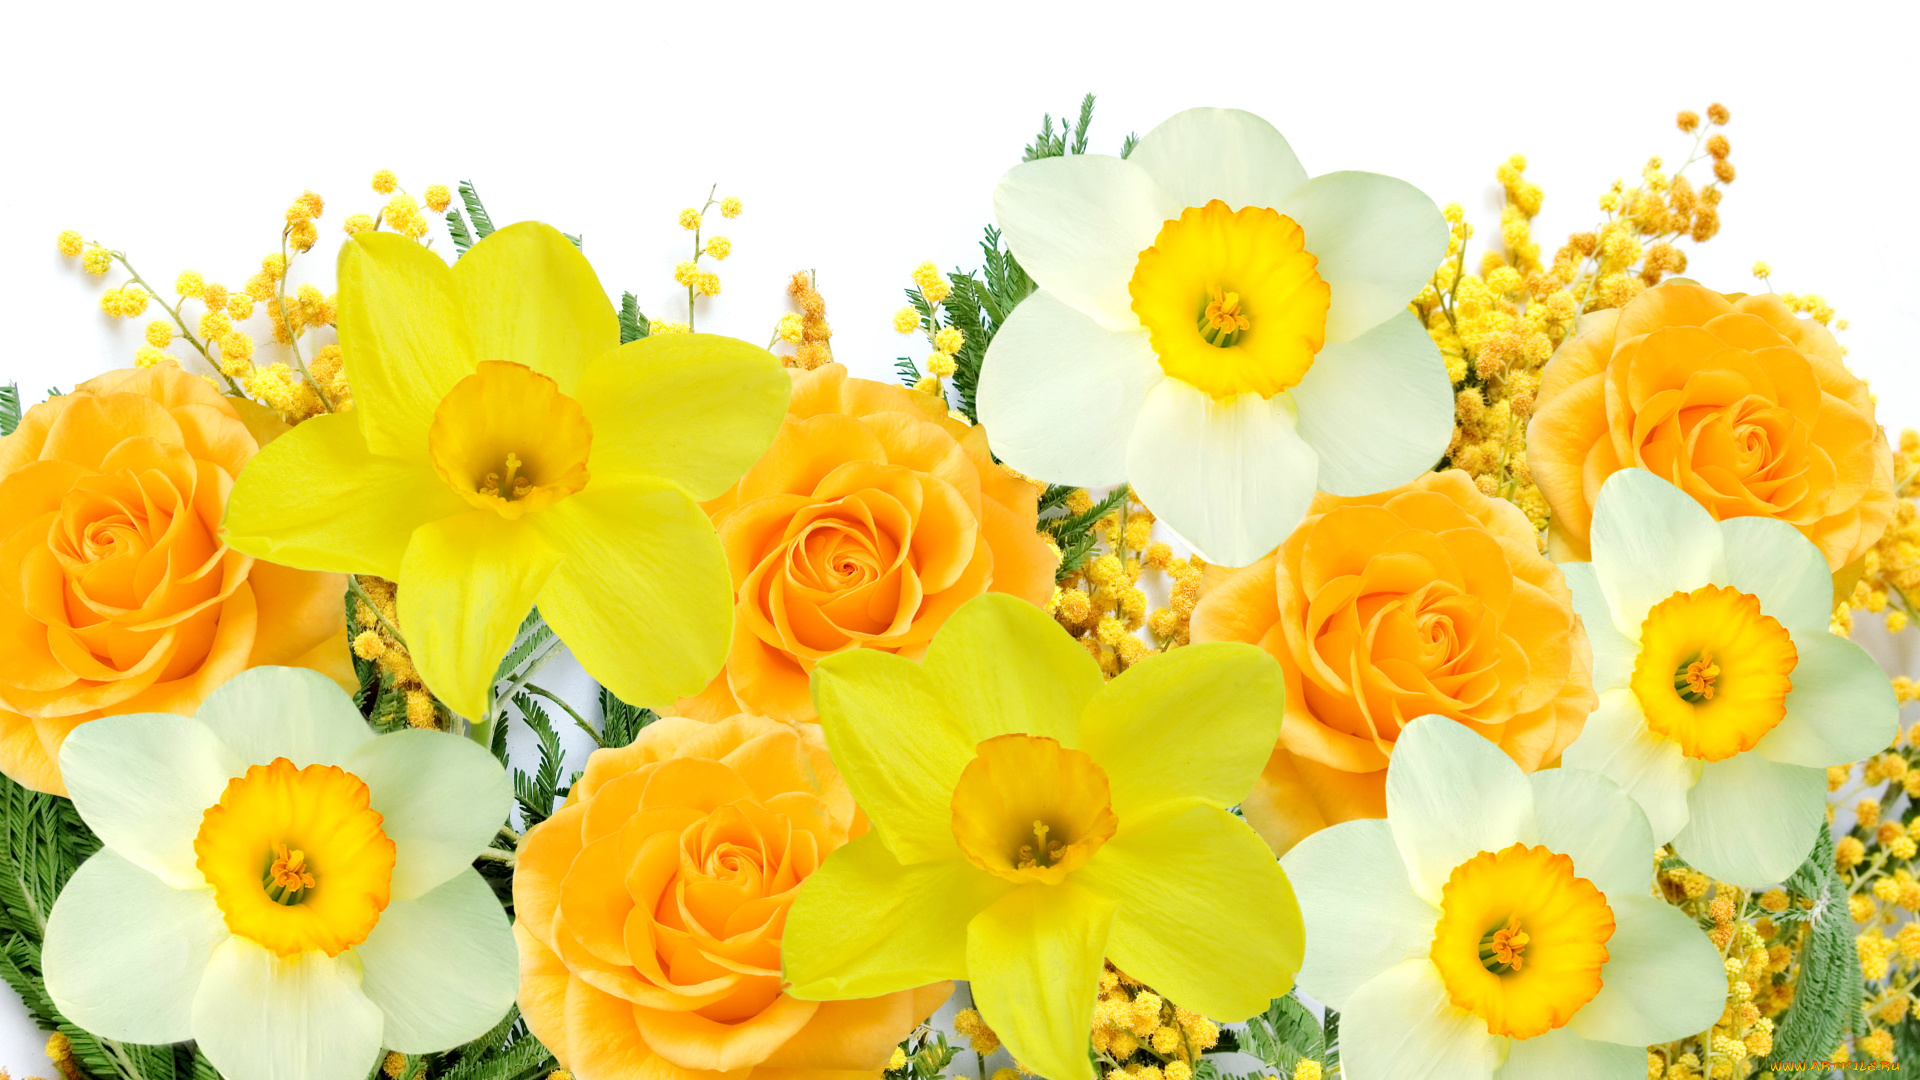 цветы, разные, вместе, spring, flowers, mimosa, daffodils, yellow, white, delicate, мимоза, нарциссы, желтый, белый, весна